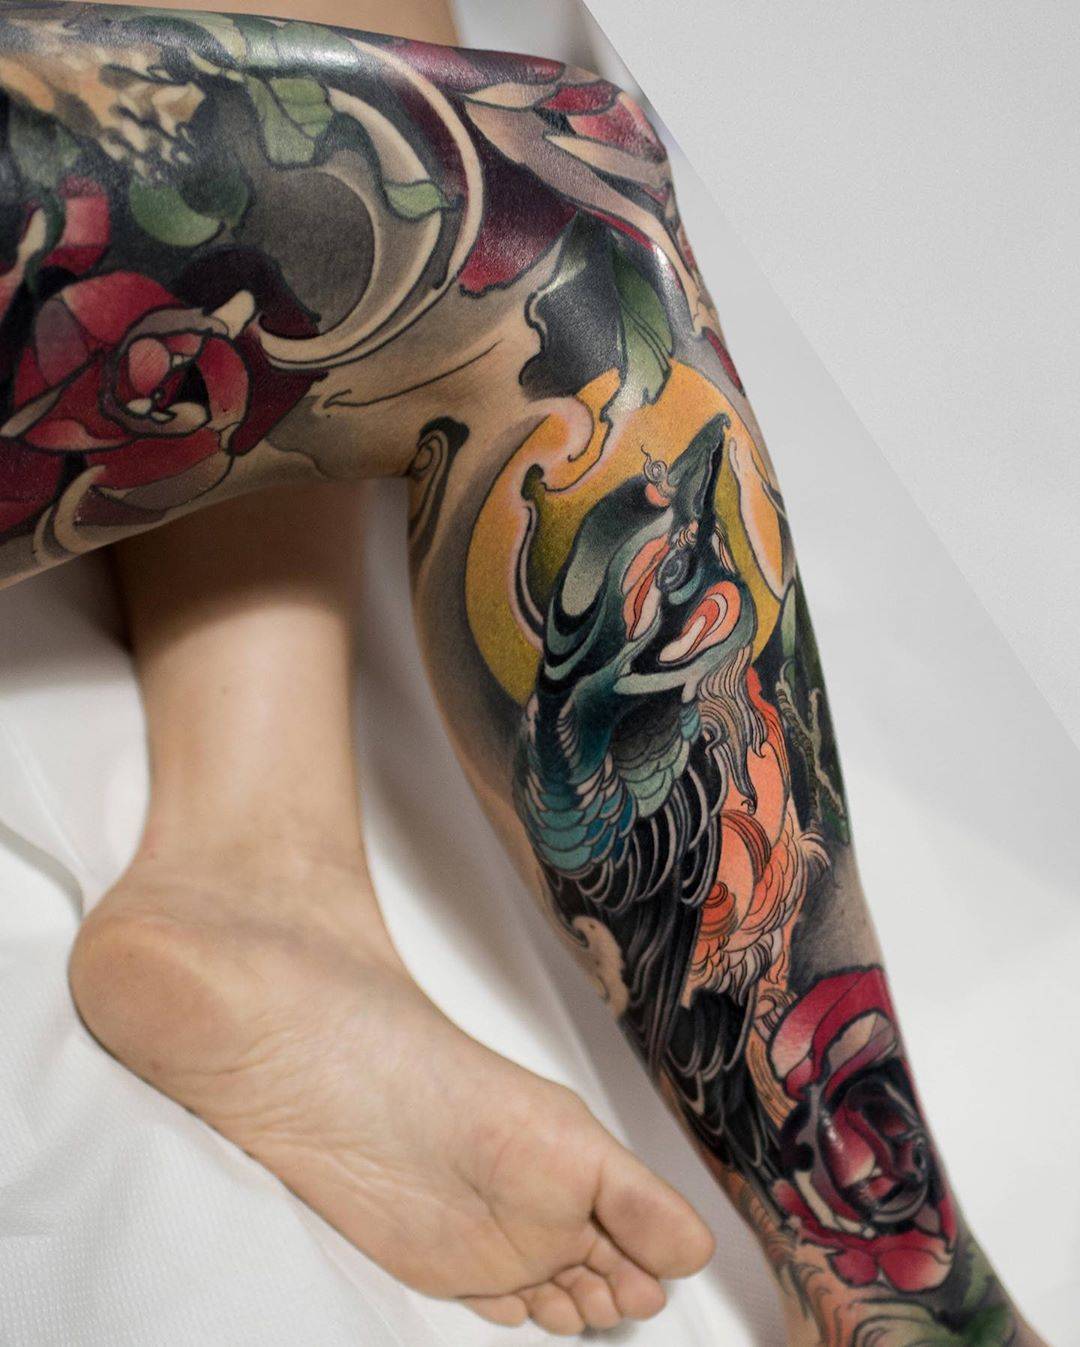 Dave Bautistas 33 Tattoos  Their Meanings  Body Art Guru